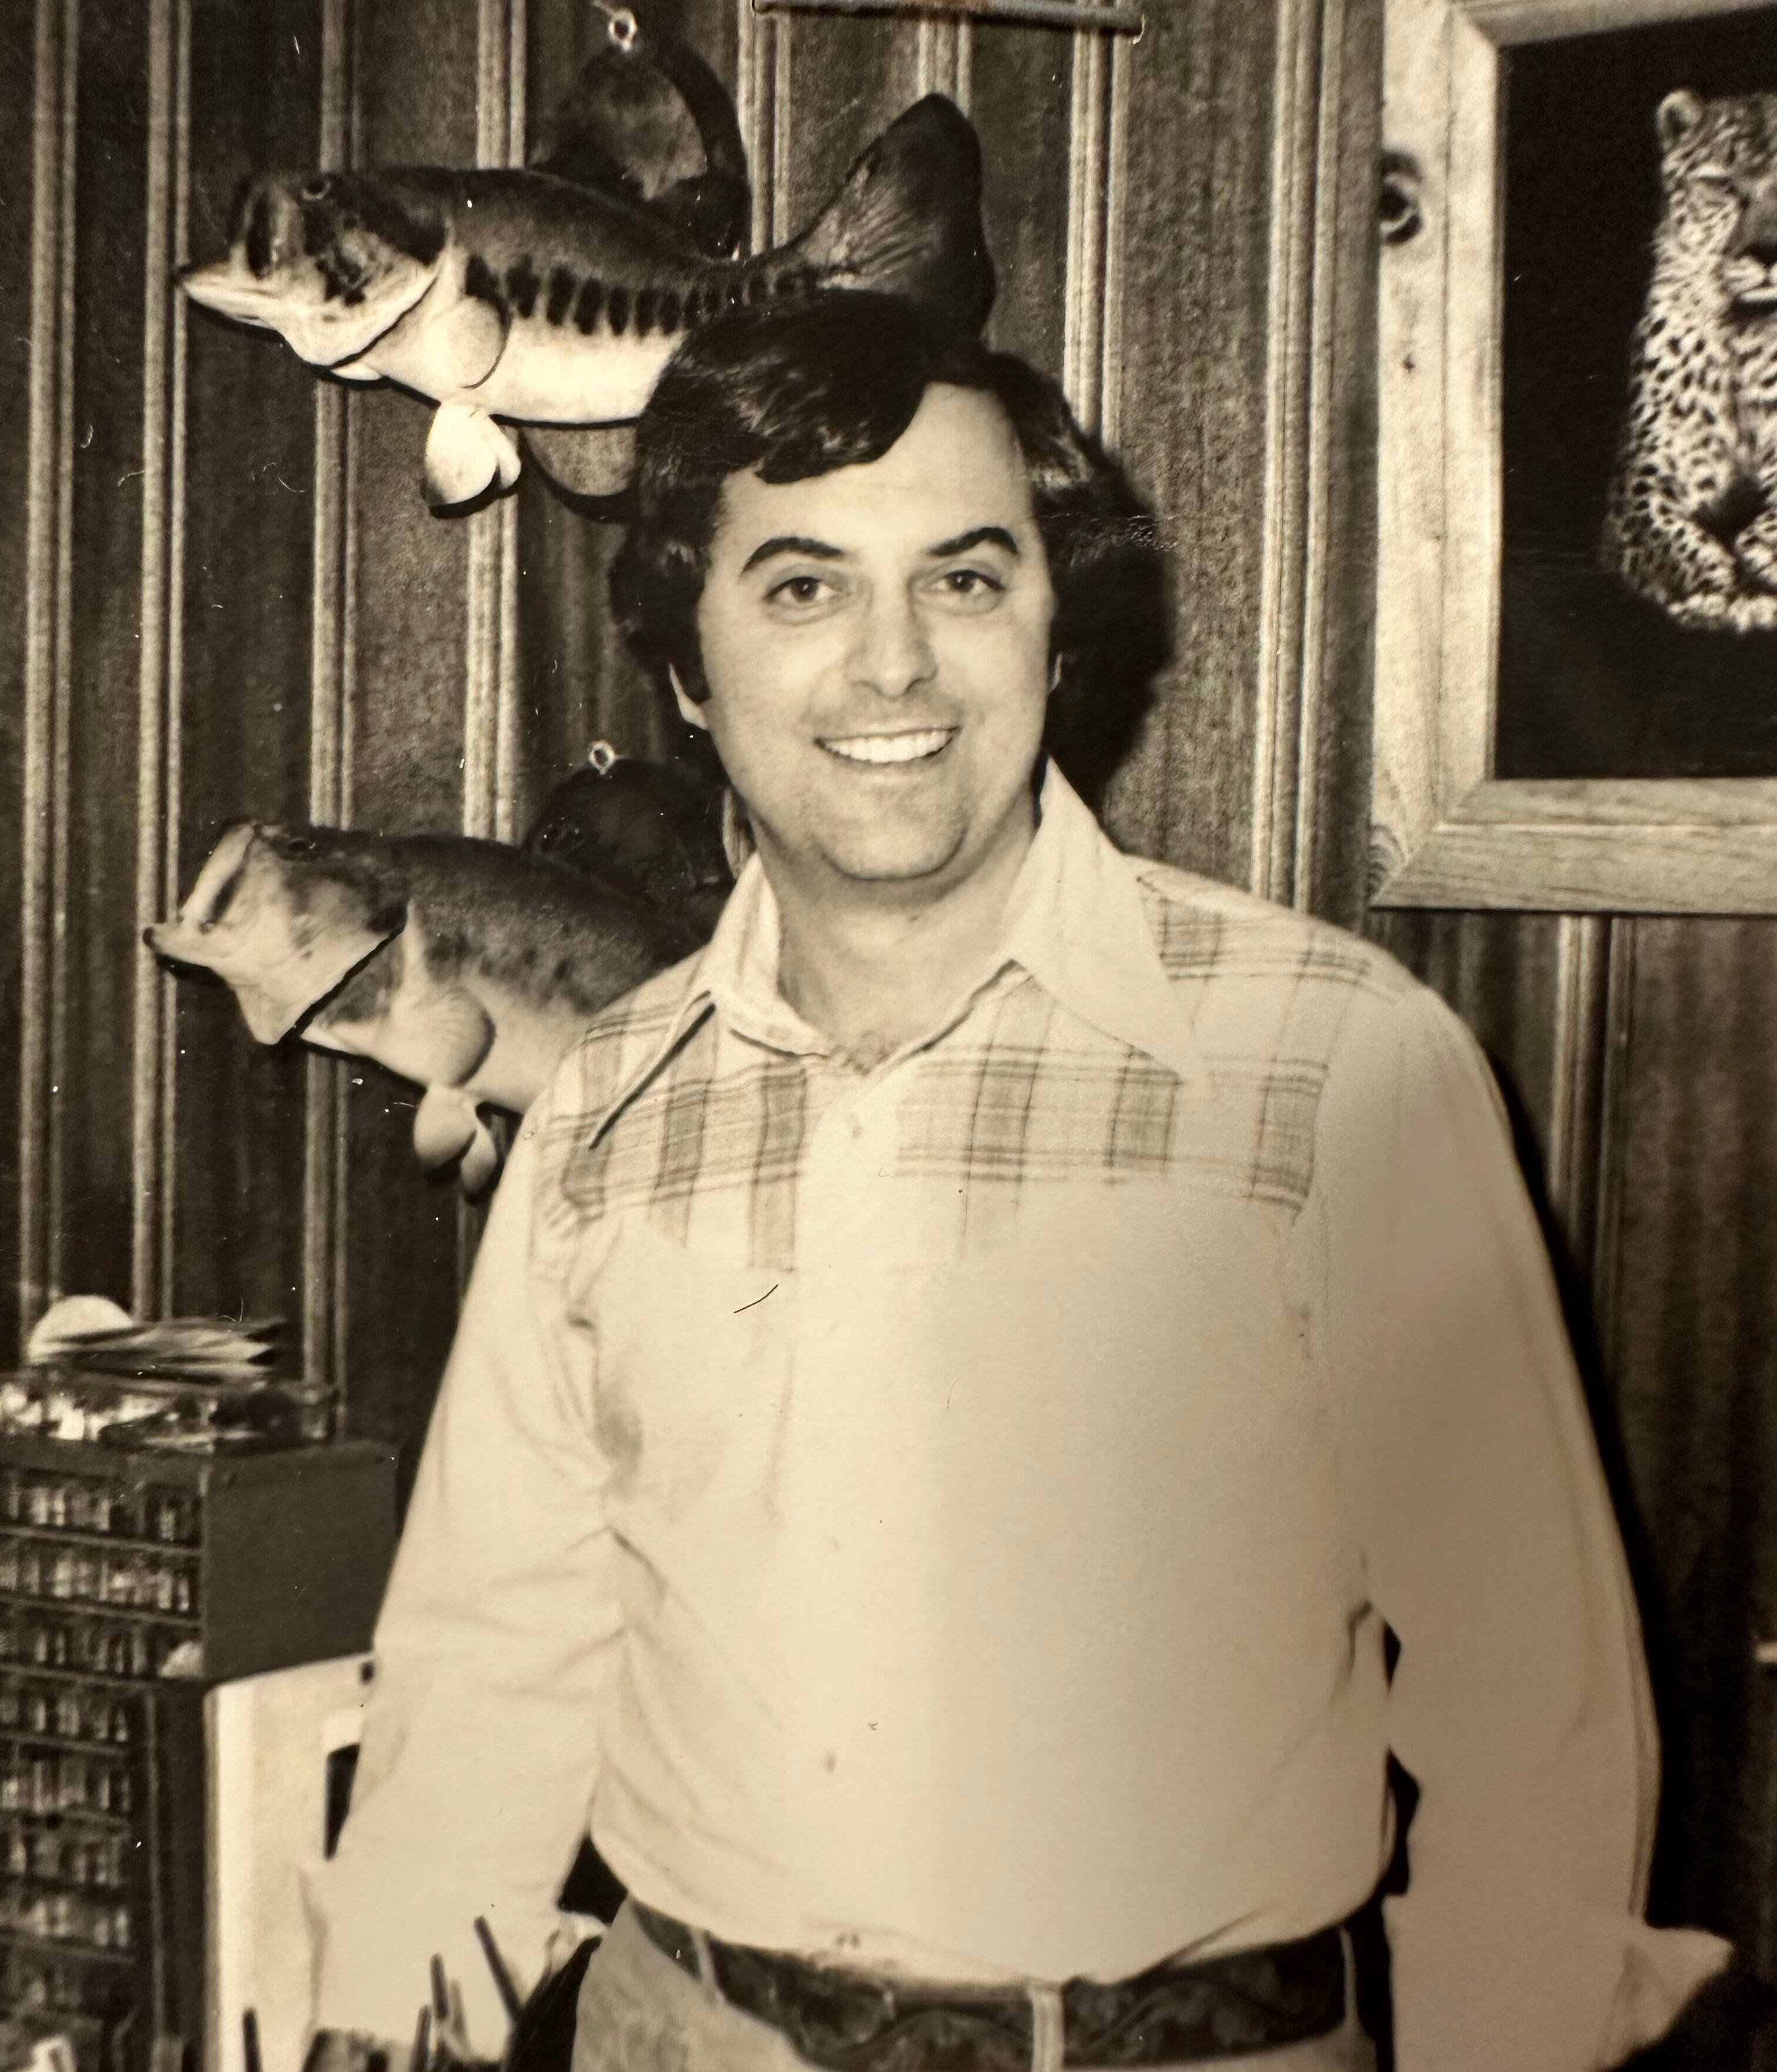 Allan at his plant in Atlanta, 1977